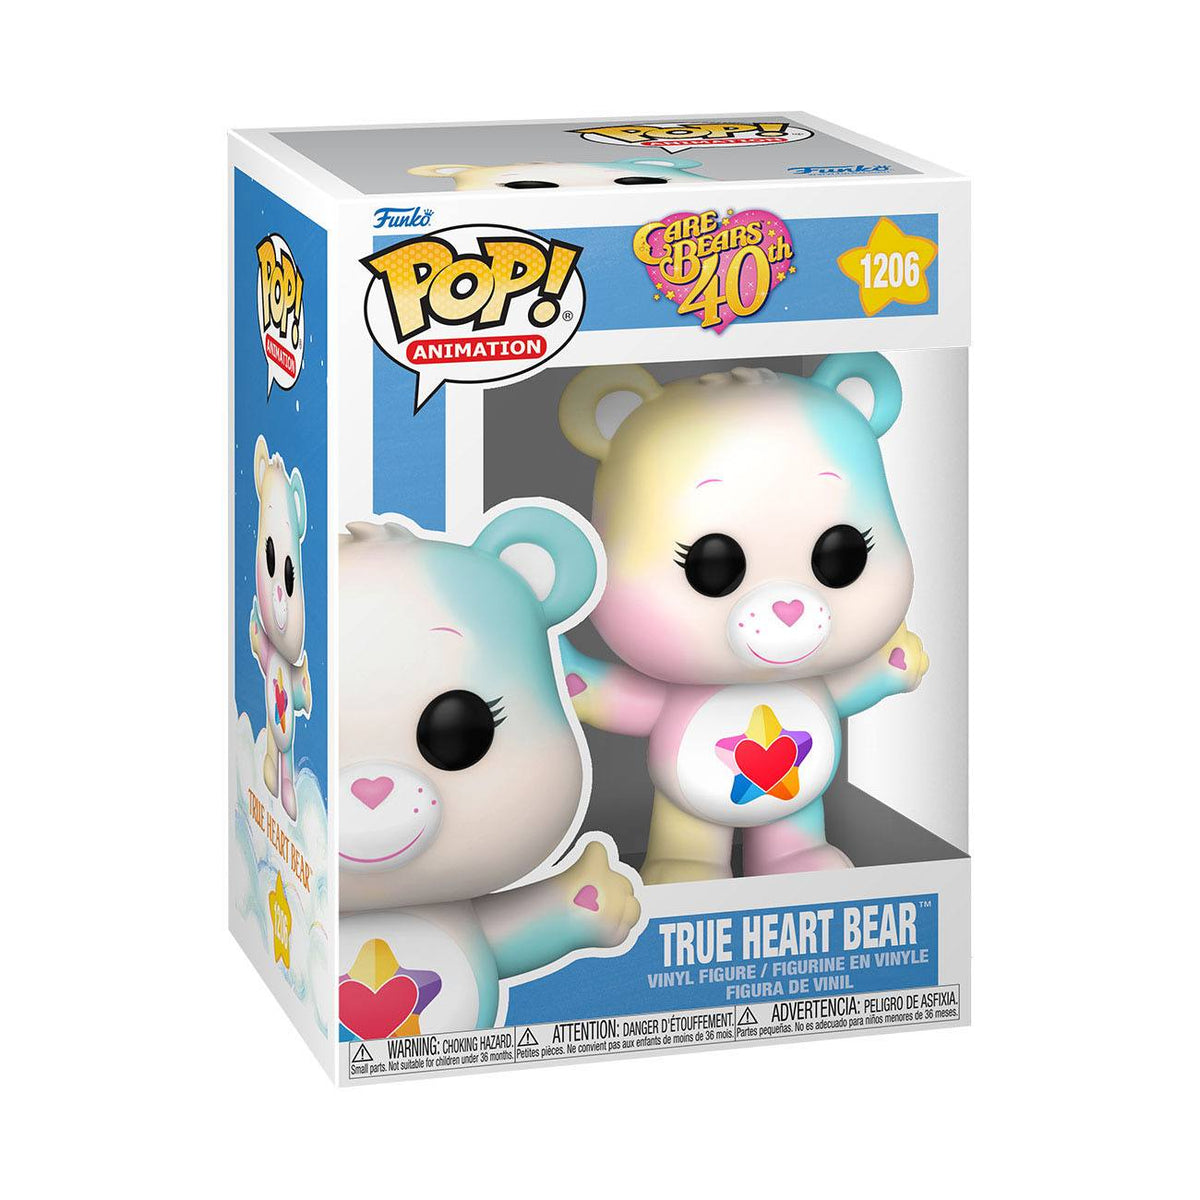 True Heart Bear - Care Bears 40th Anniversary - Funko POP!